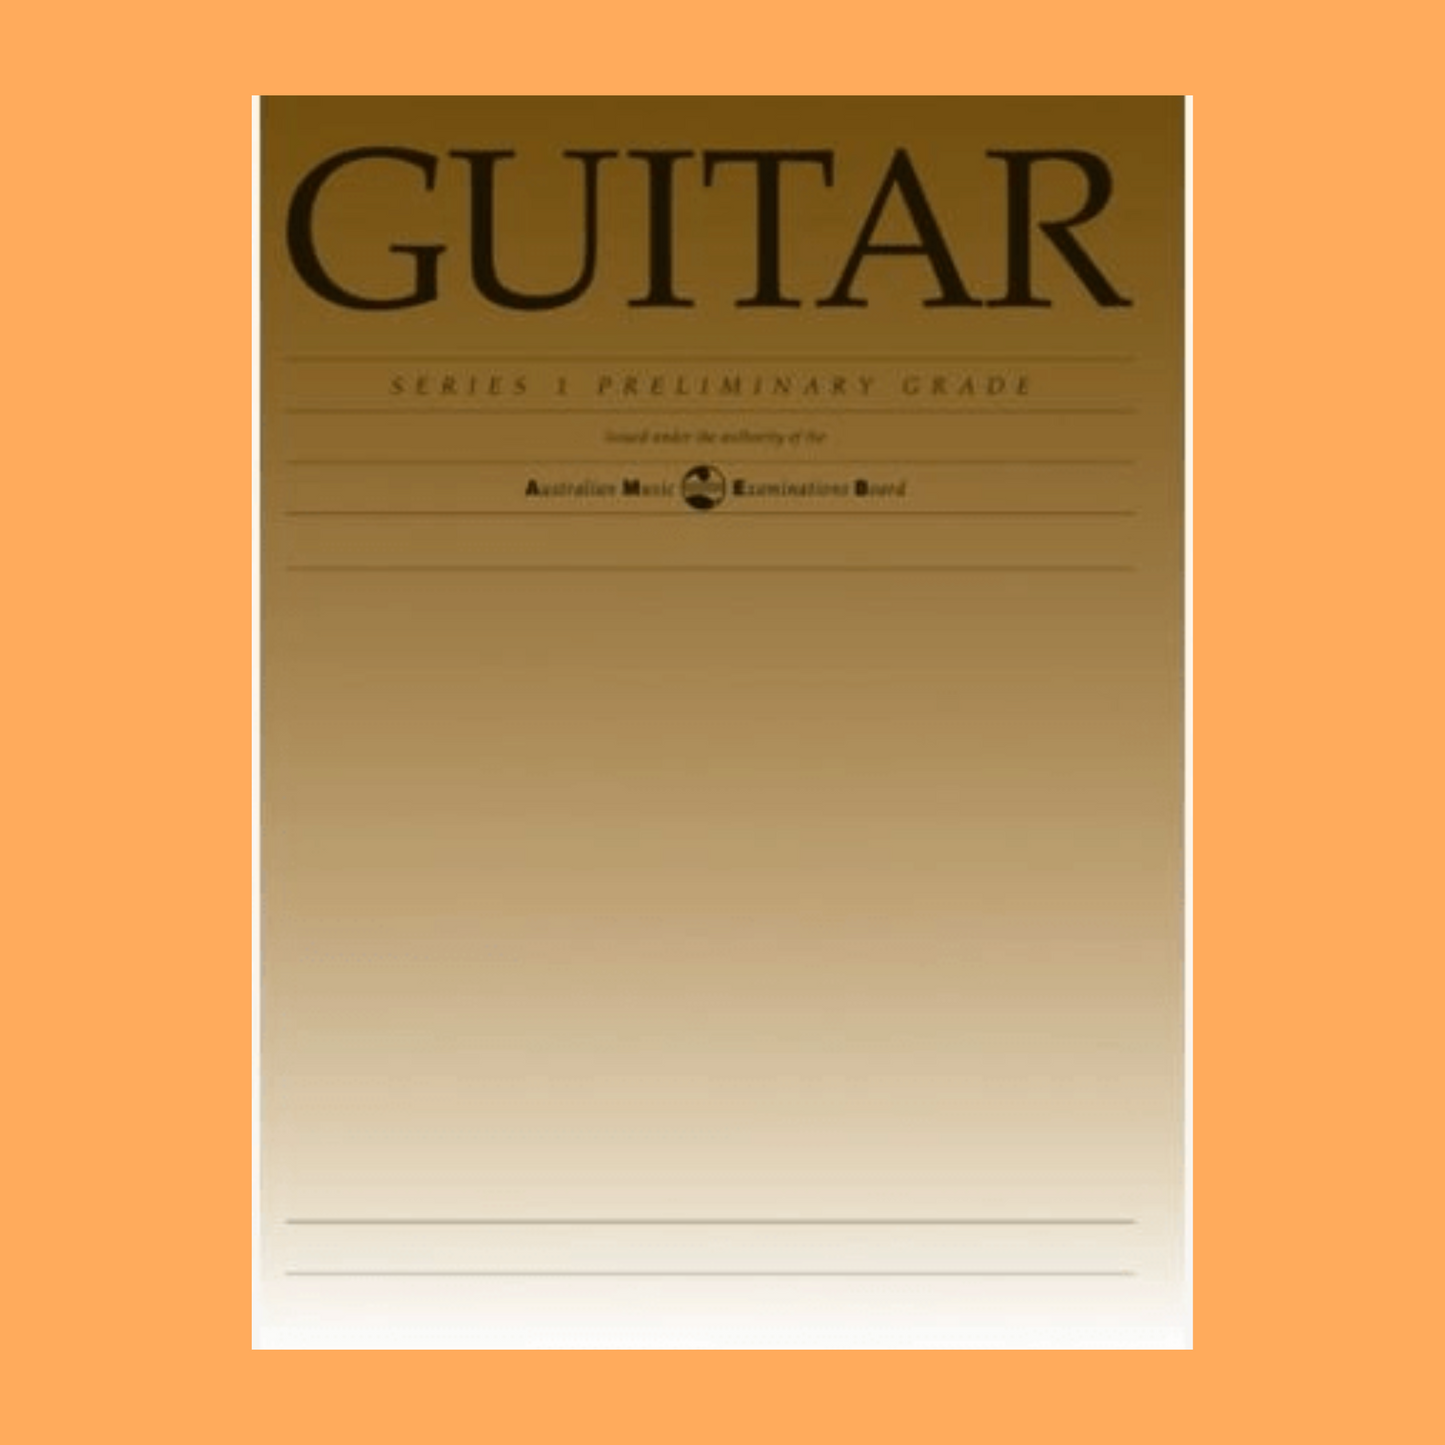 AMEB Classical Guitar Series 1 - Preliminary Grade Book